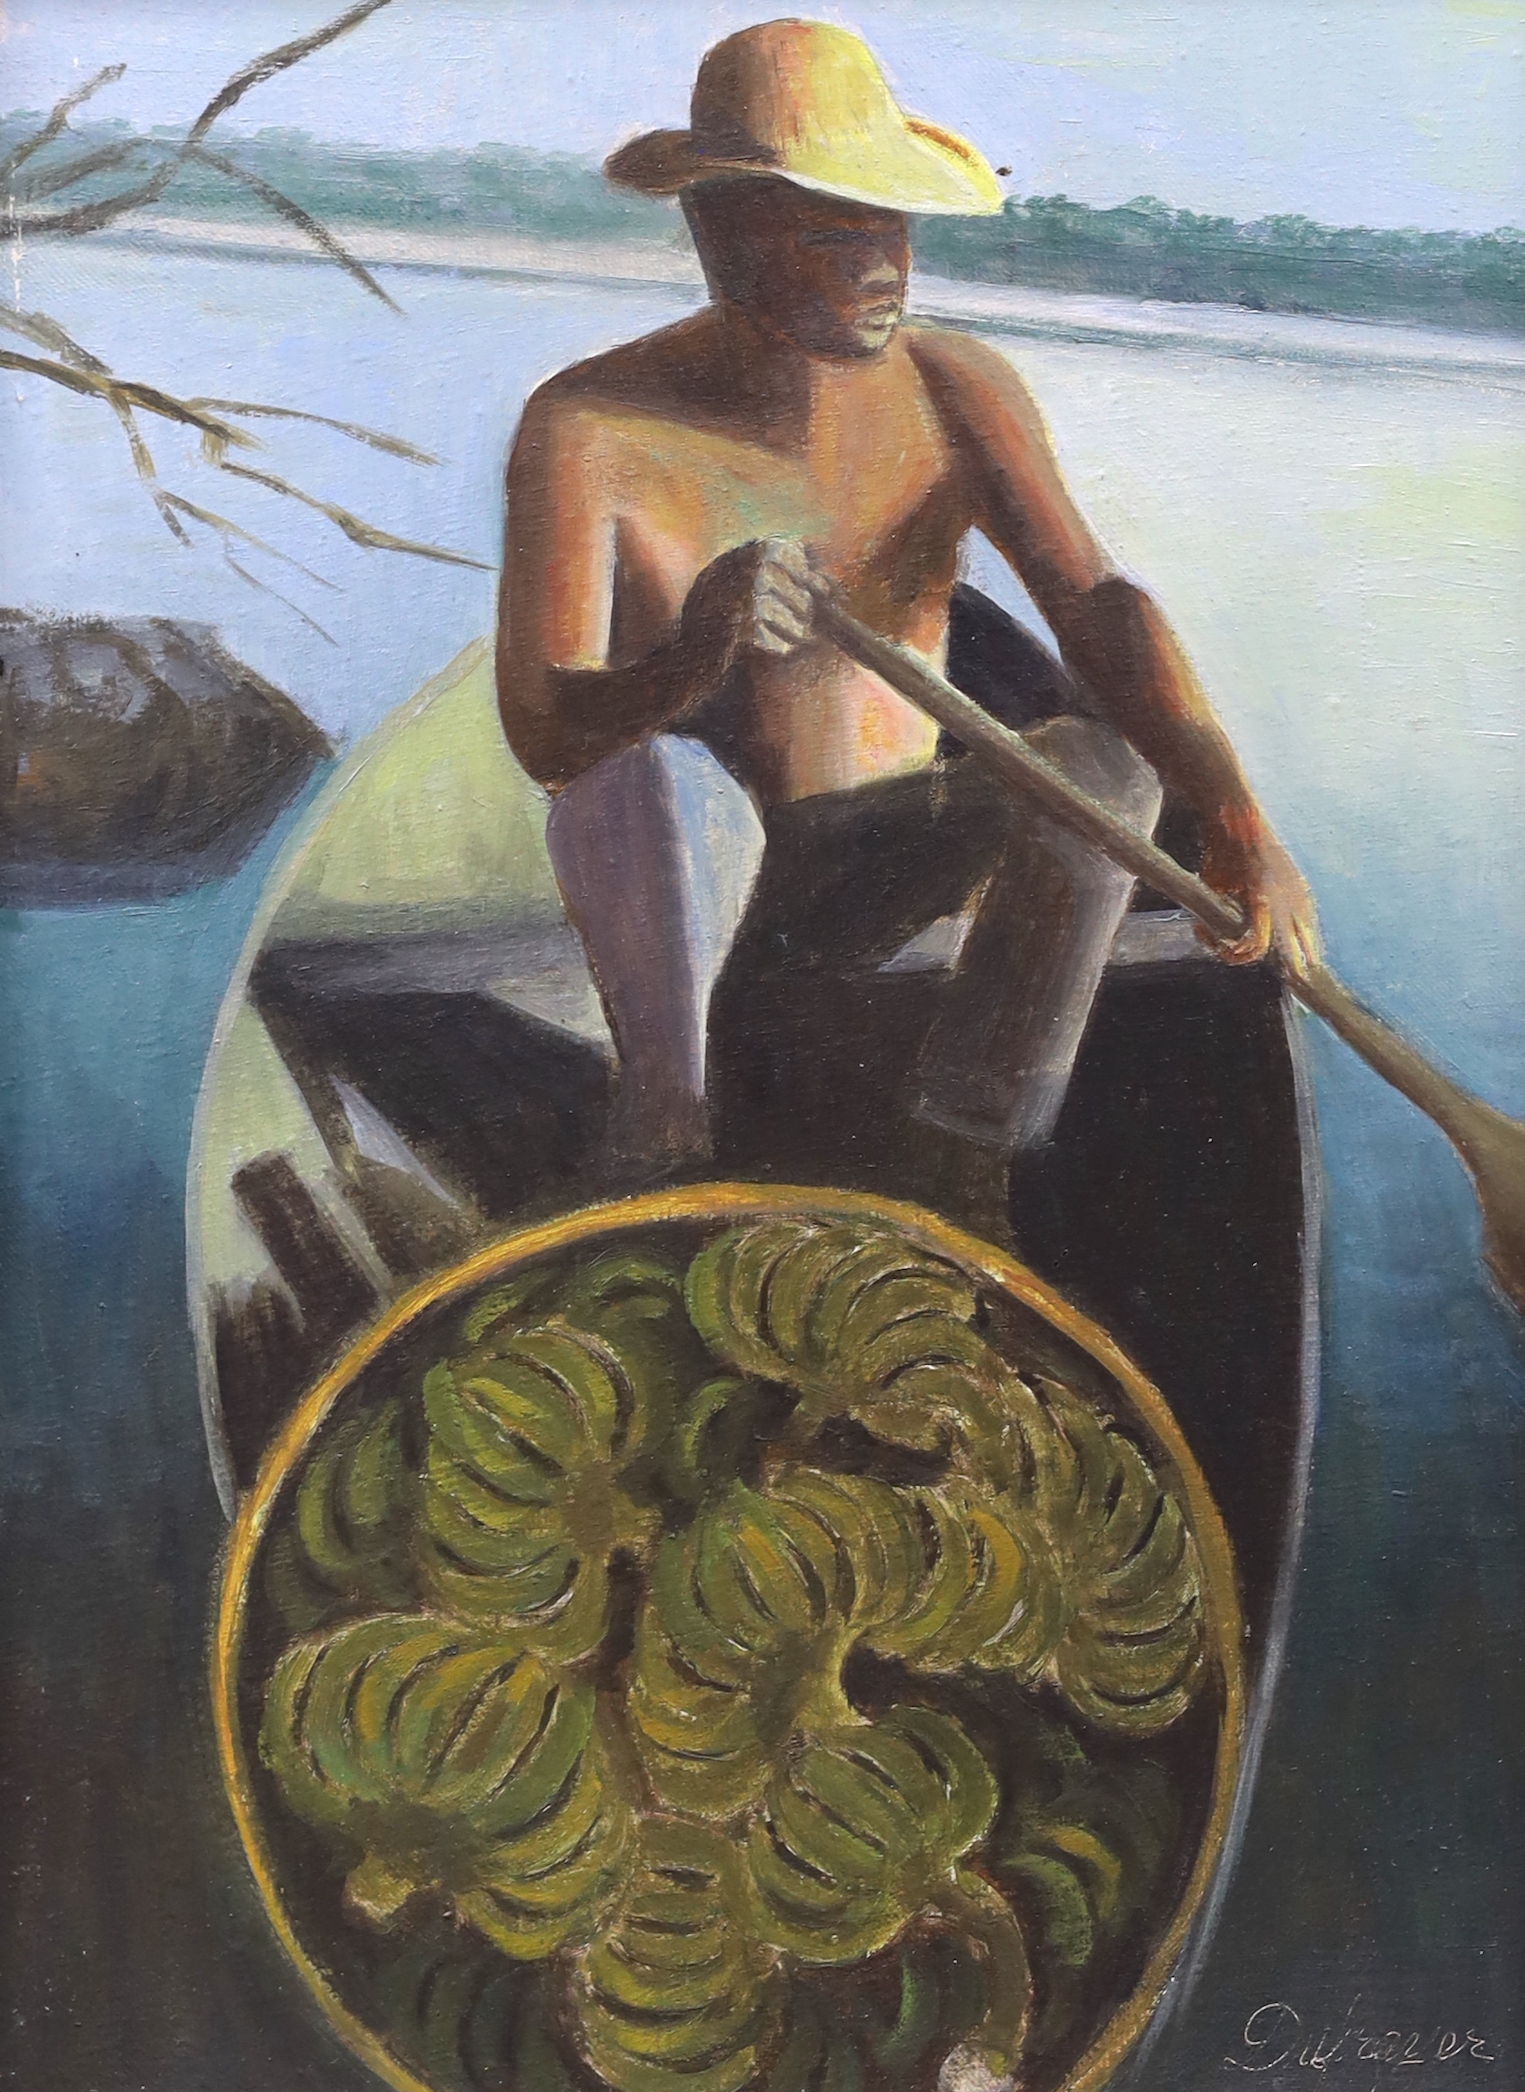 Candeiro (Brazilian), oil on canvas, 'Canoe', signed, inscribed verso, 32 x 23cm